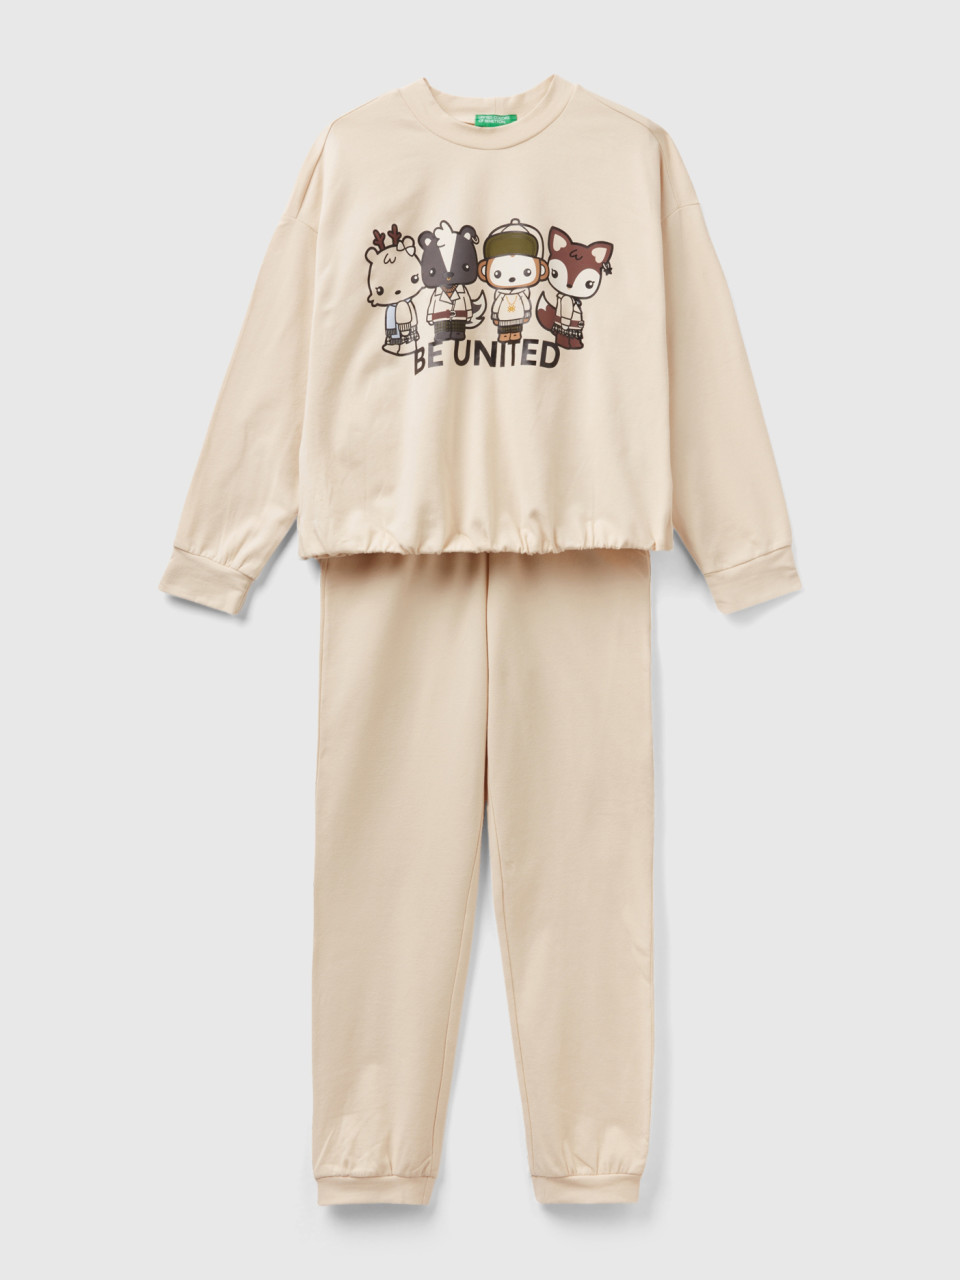 Benetton, Mascot Pyjamas With Cropped Shirt, Beige, Kids